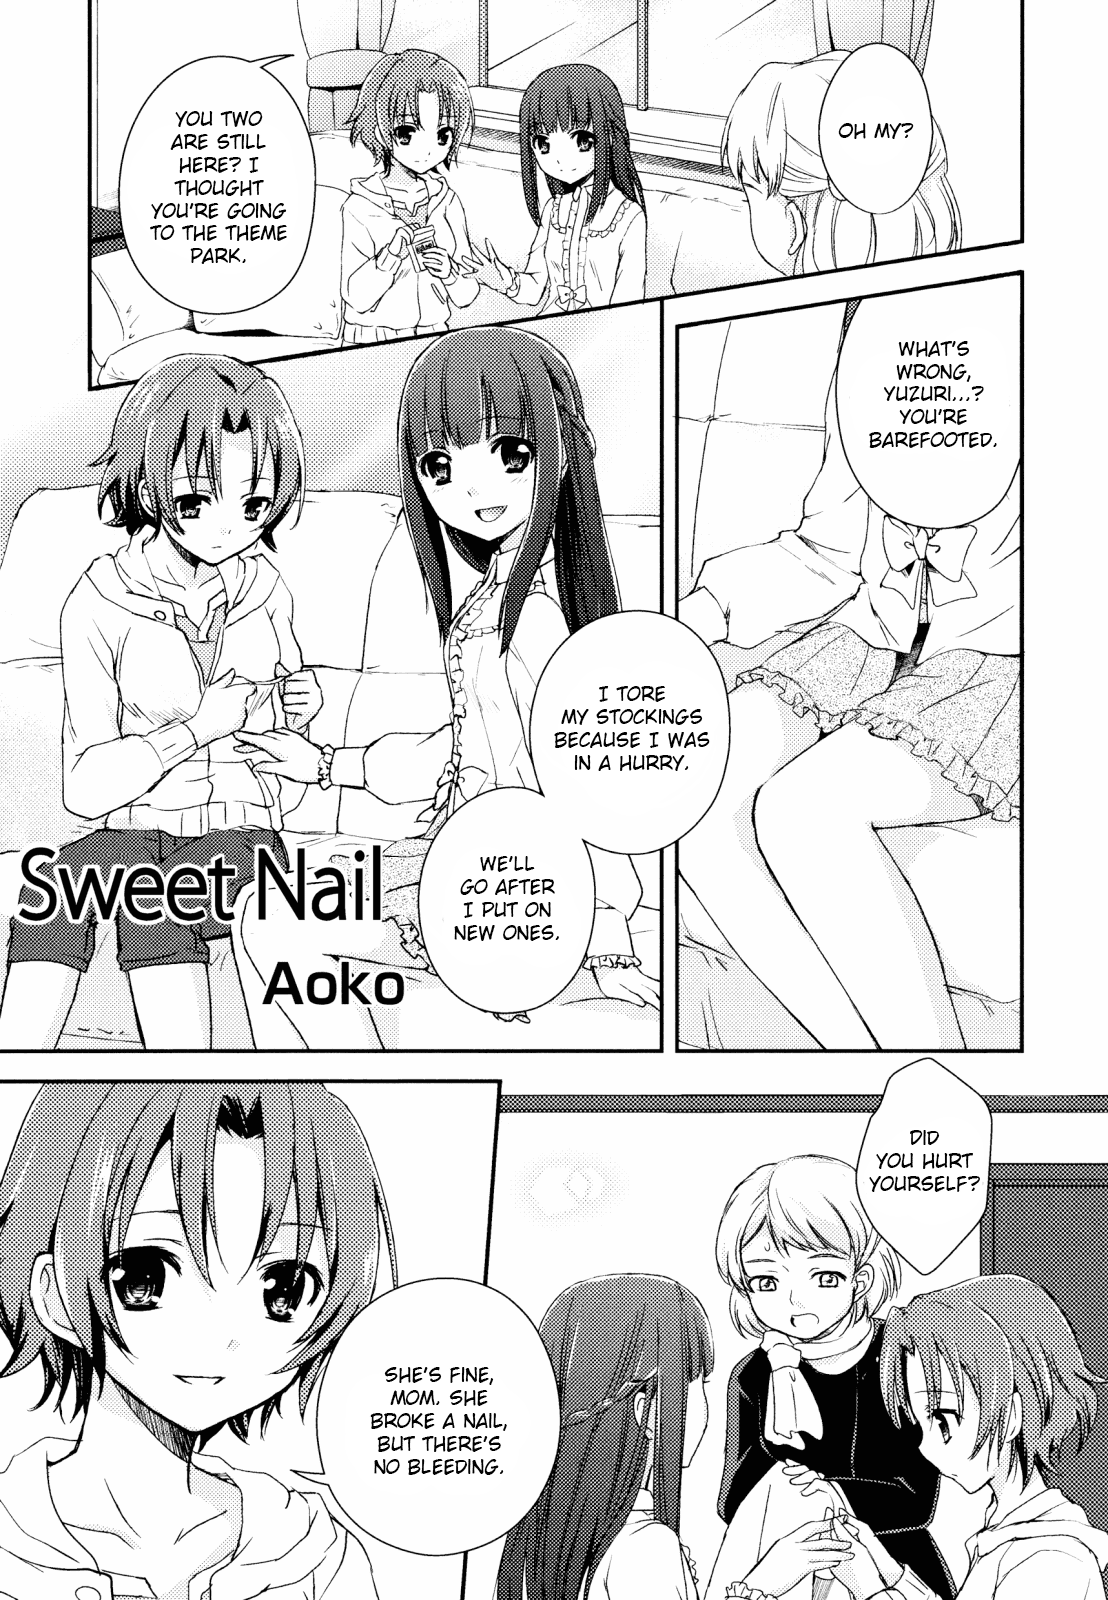 Sweet Nail (Forbidden Sisters) by Aoko An original yuri h-manga oneshot that contains